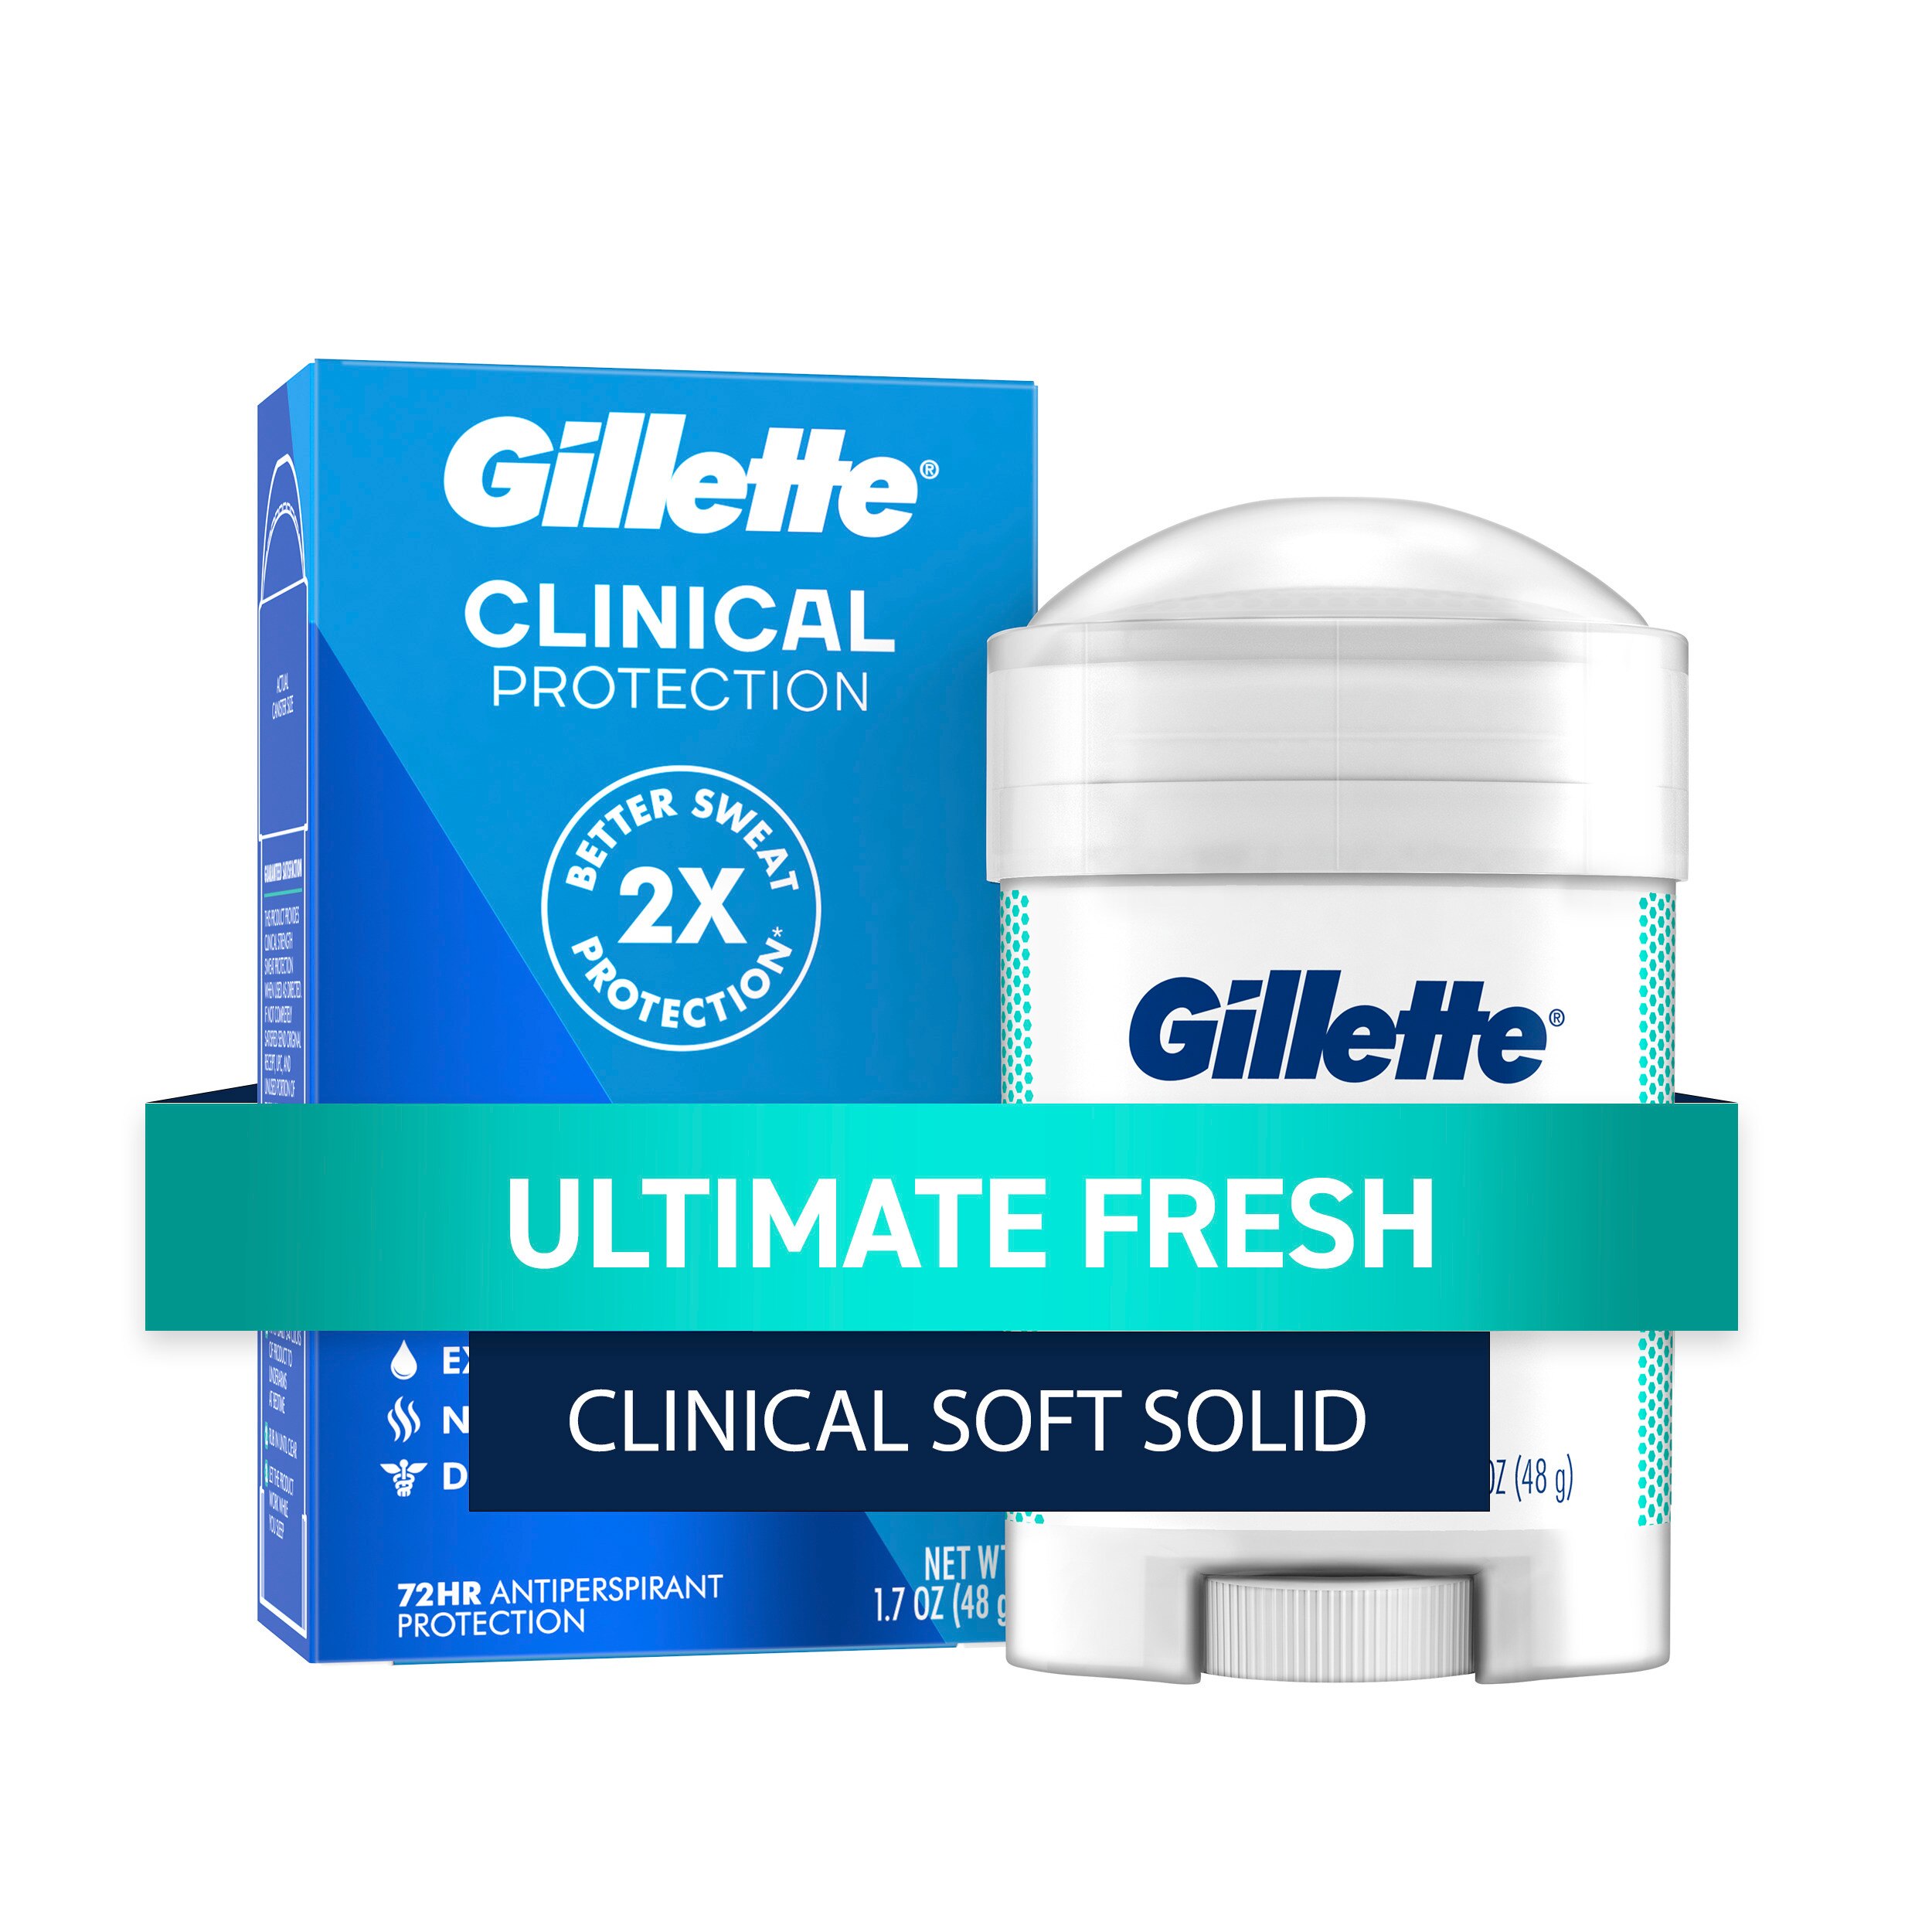 Gillette Clinical Protection Antiperspirant Deodorant Stick for Men, Ultimate Fresh, 1.7 OZ